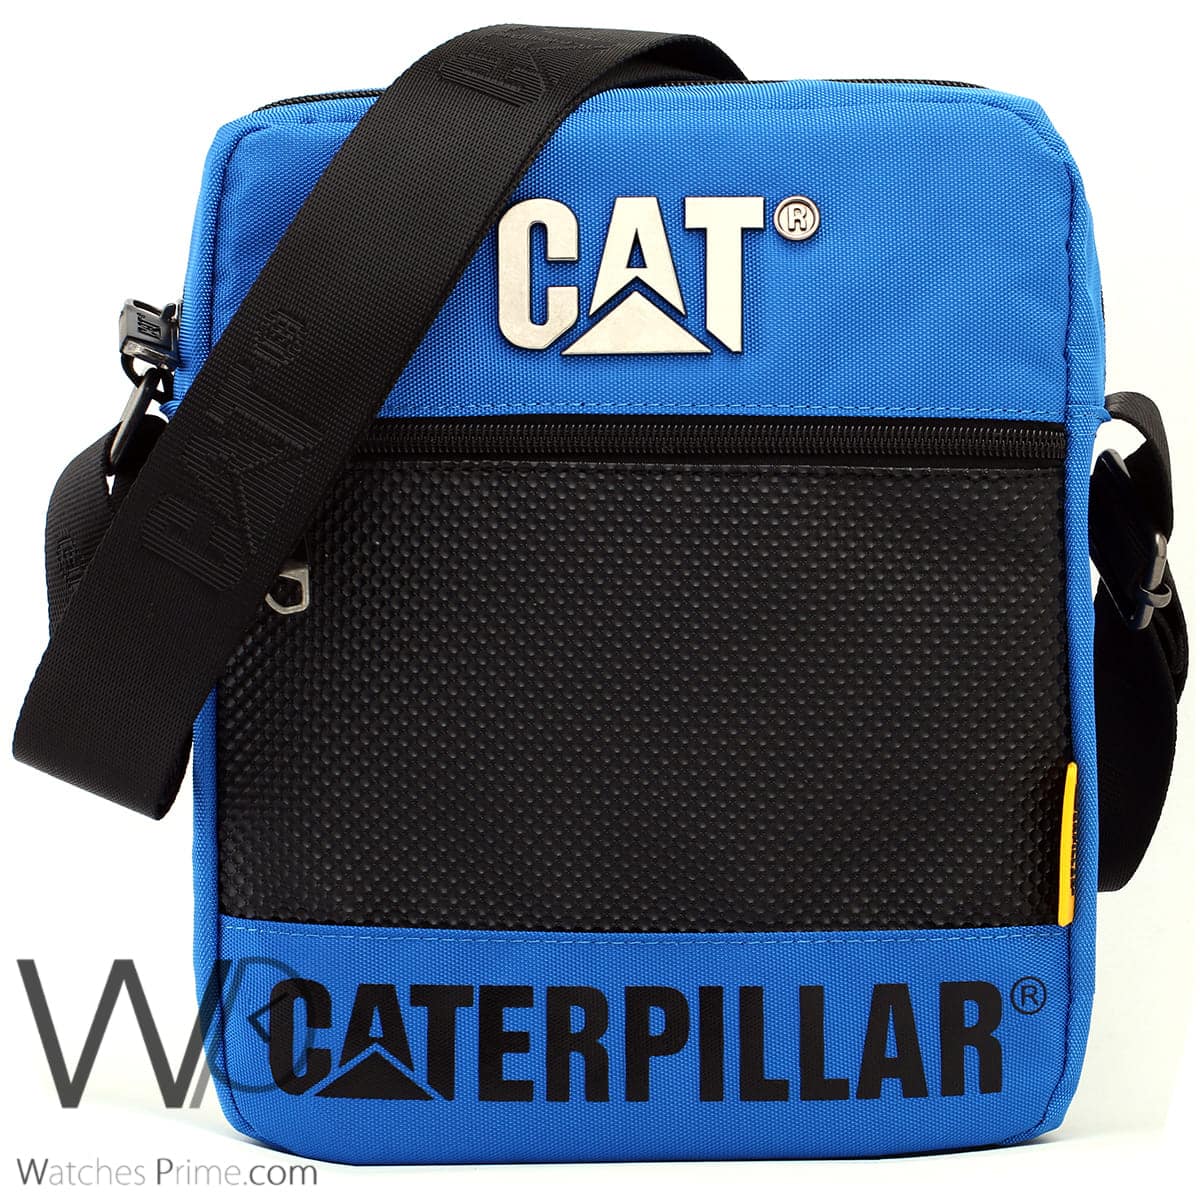 Caterpillar-messenger-crossbody-blue-nylon-shoulder-bag-for-men-belfast-signature-cat